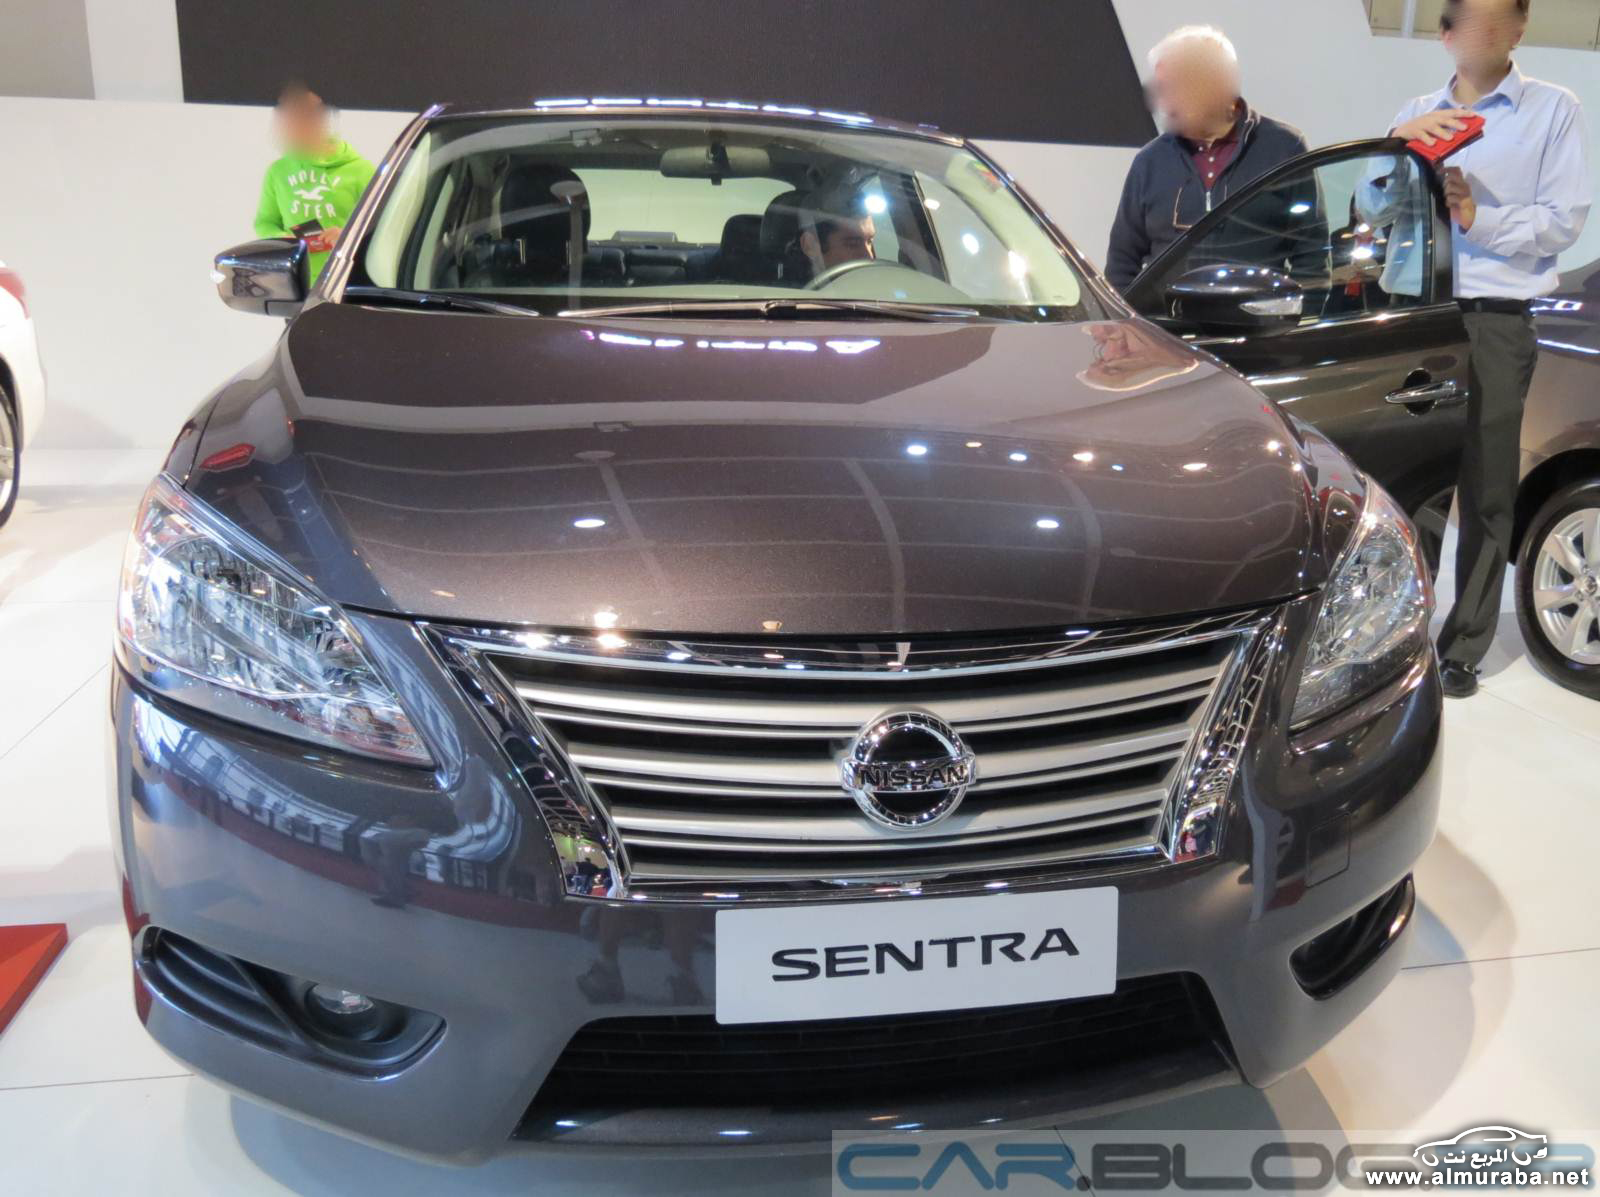 Nissan-Sentra-2015 (8)